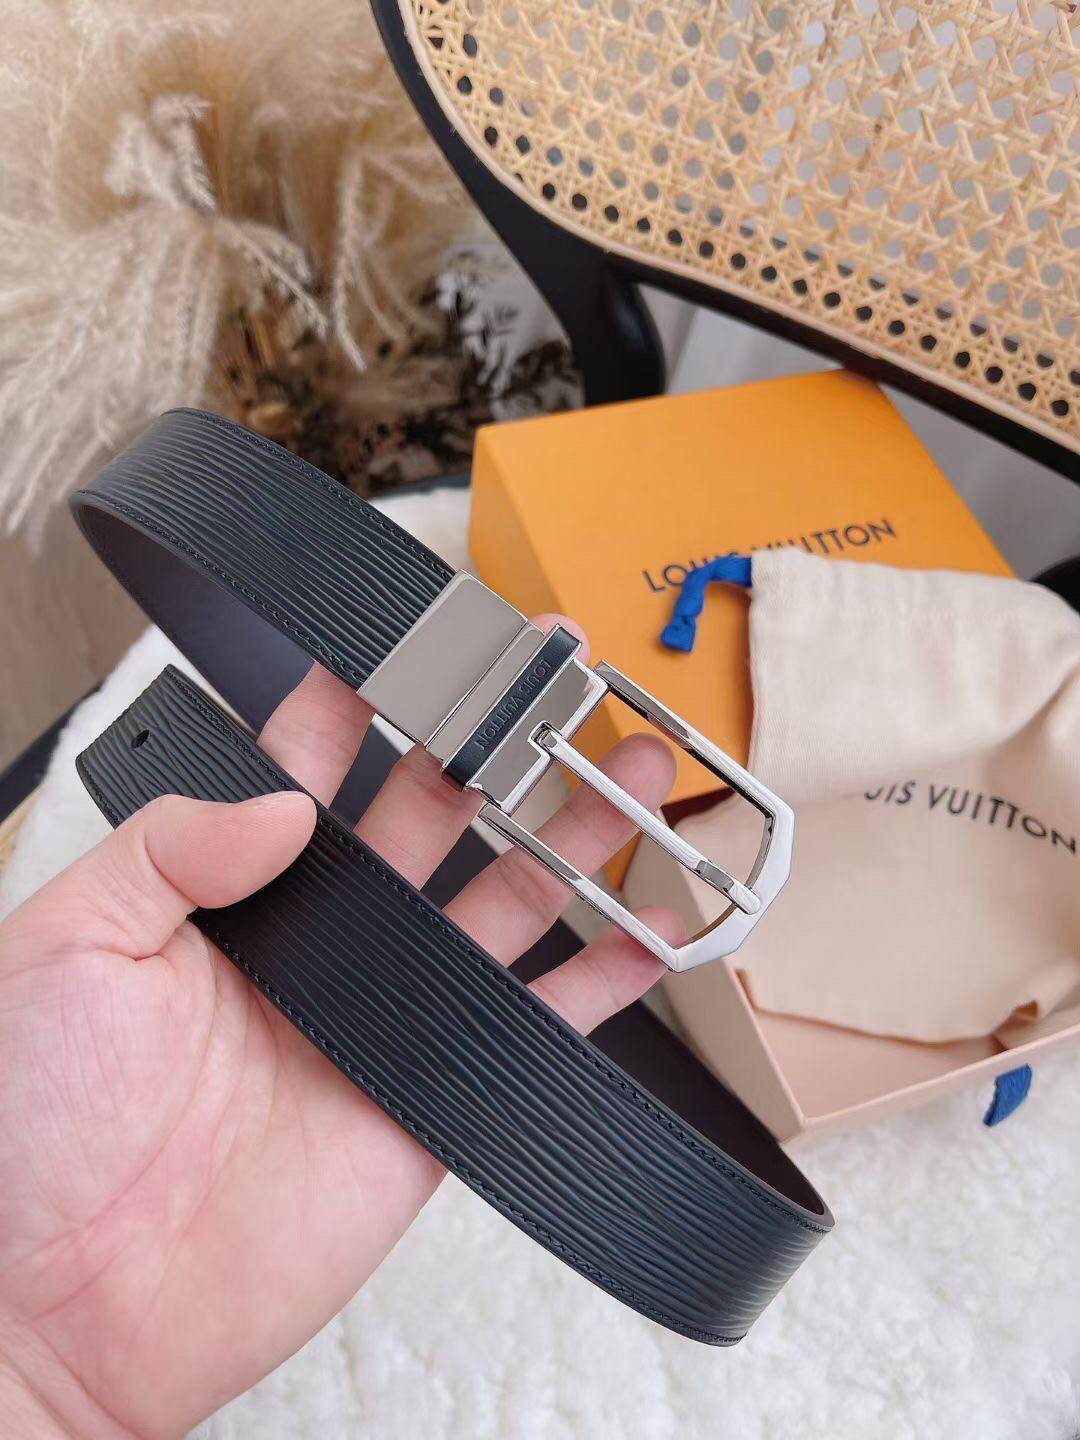 Louis Vuitton Slender 35mm Reversible Belt